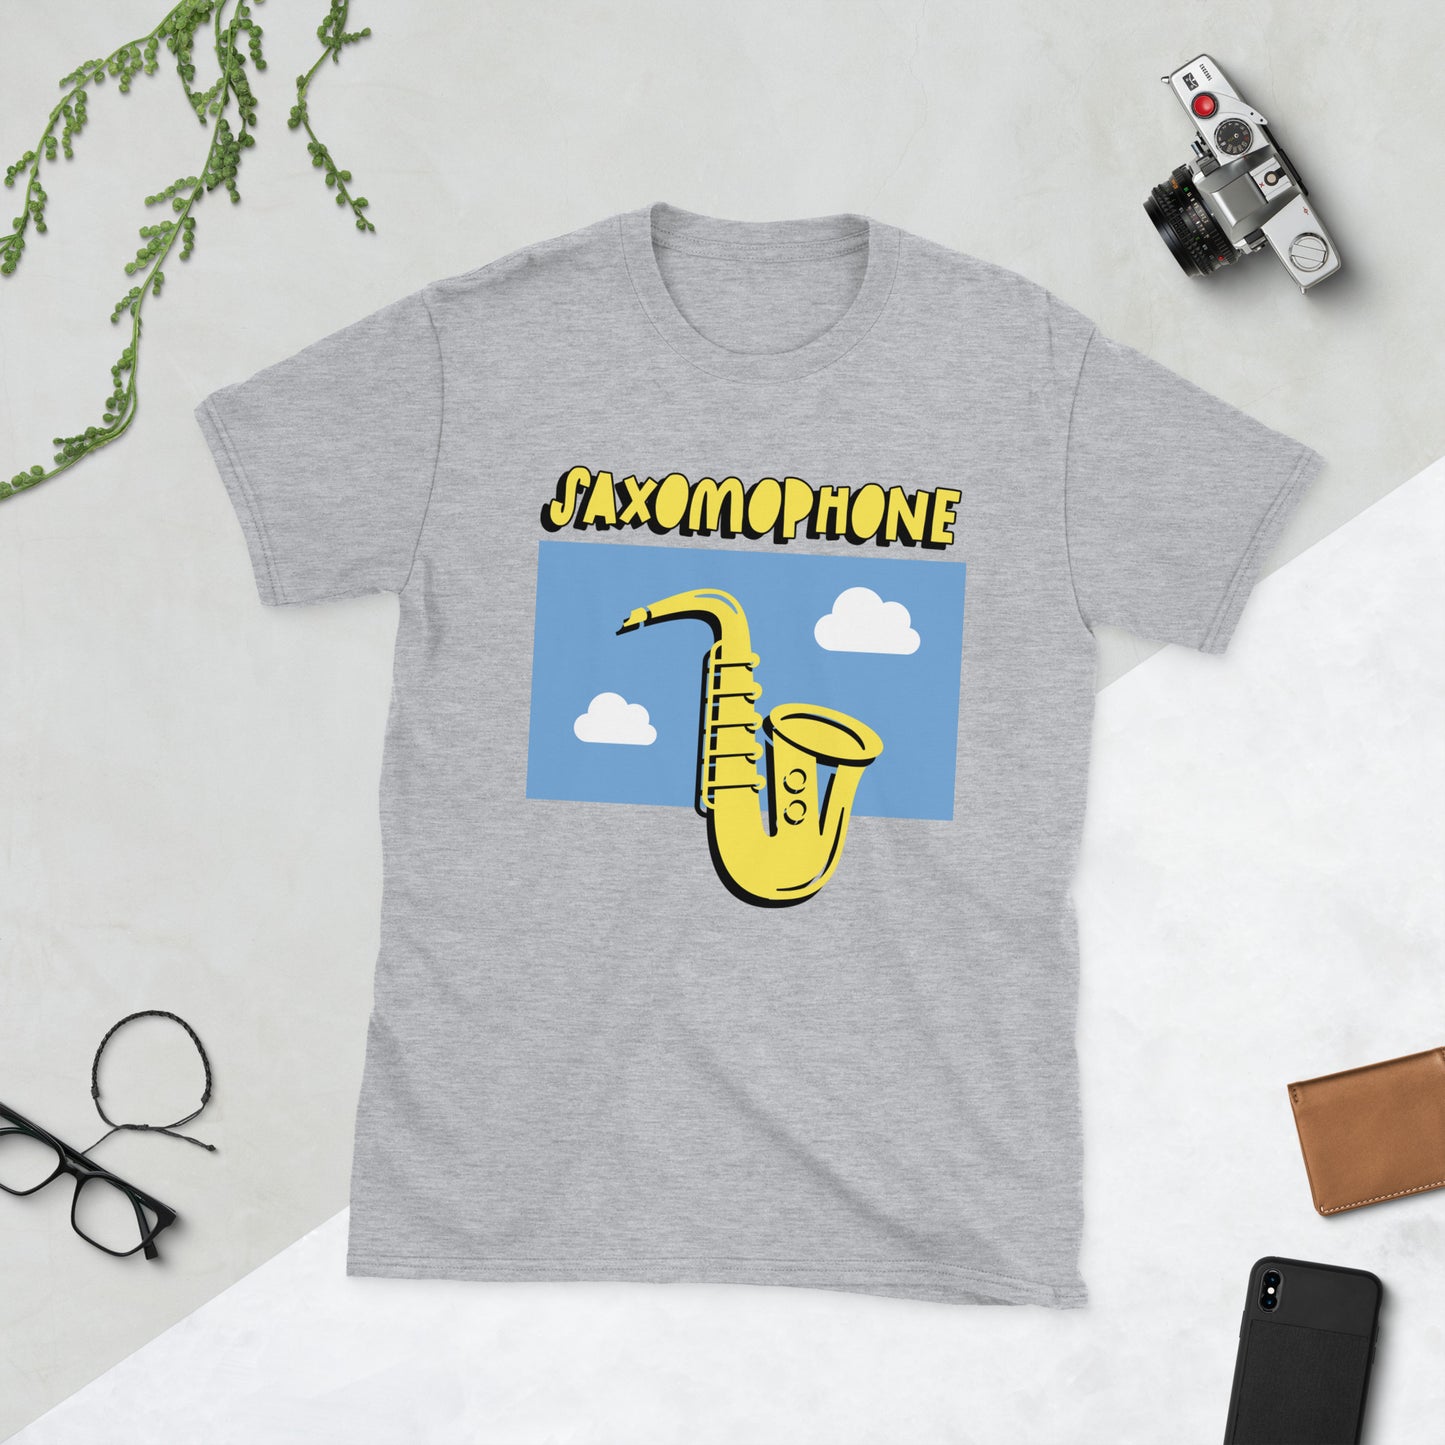 Saxomophone. Designed for the light Unisex T-Shirt